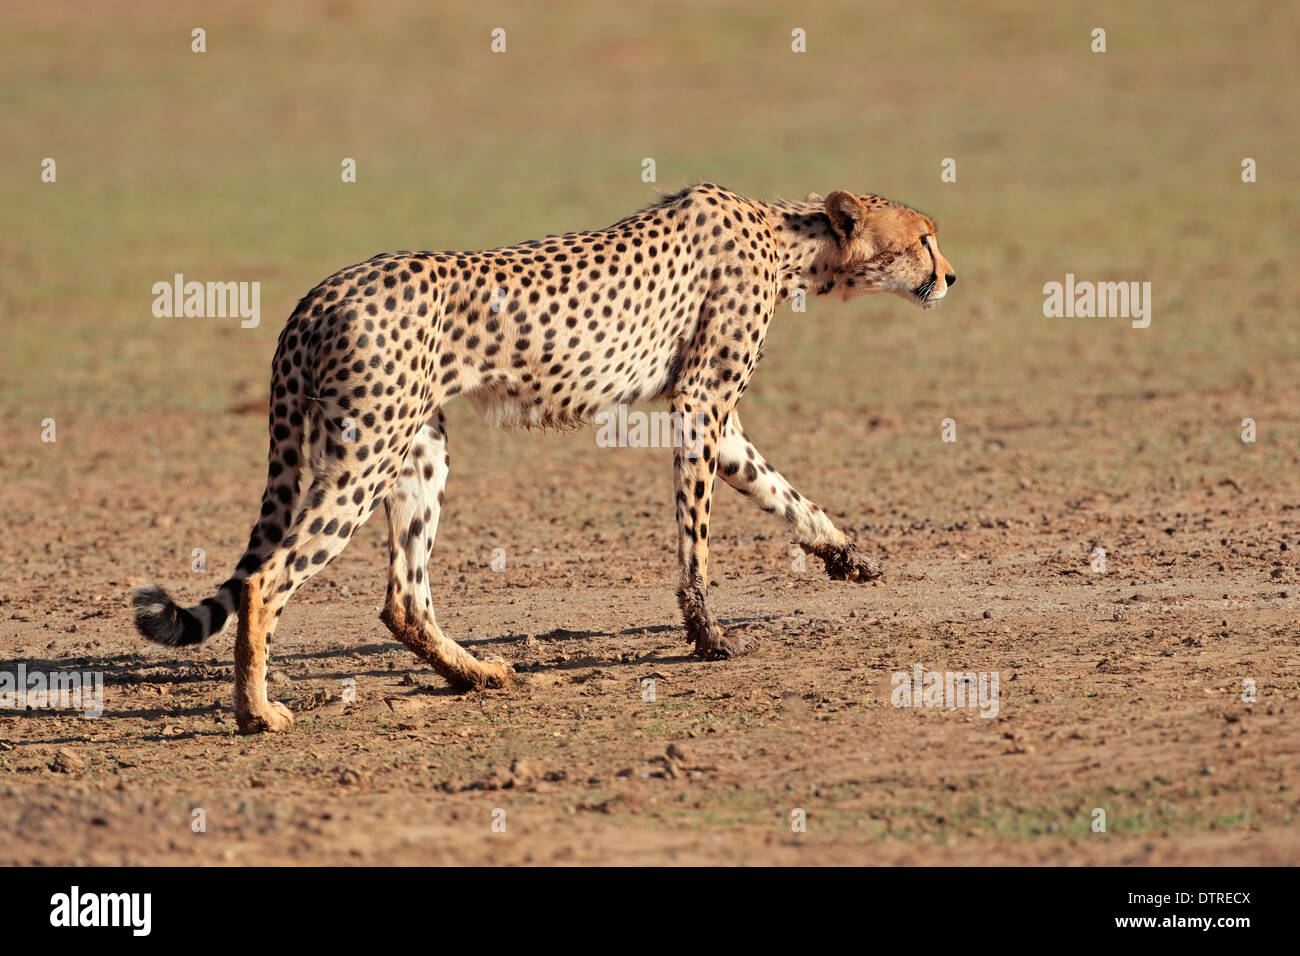 Alert cheetah (Acinonyx jubatus), Kalahari desert, South Africa Stock Photo